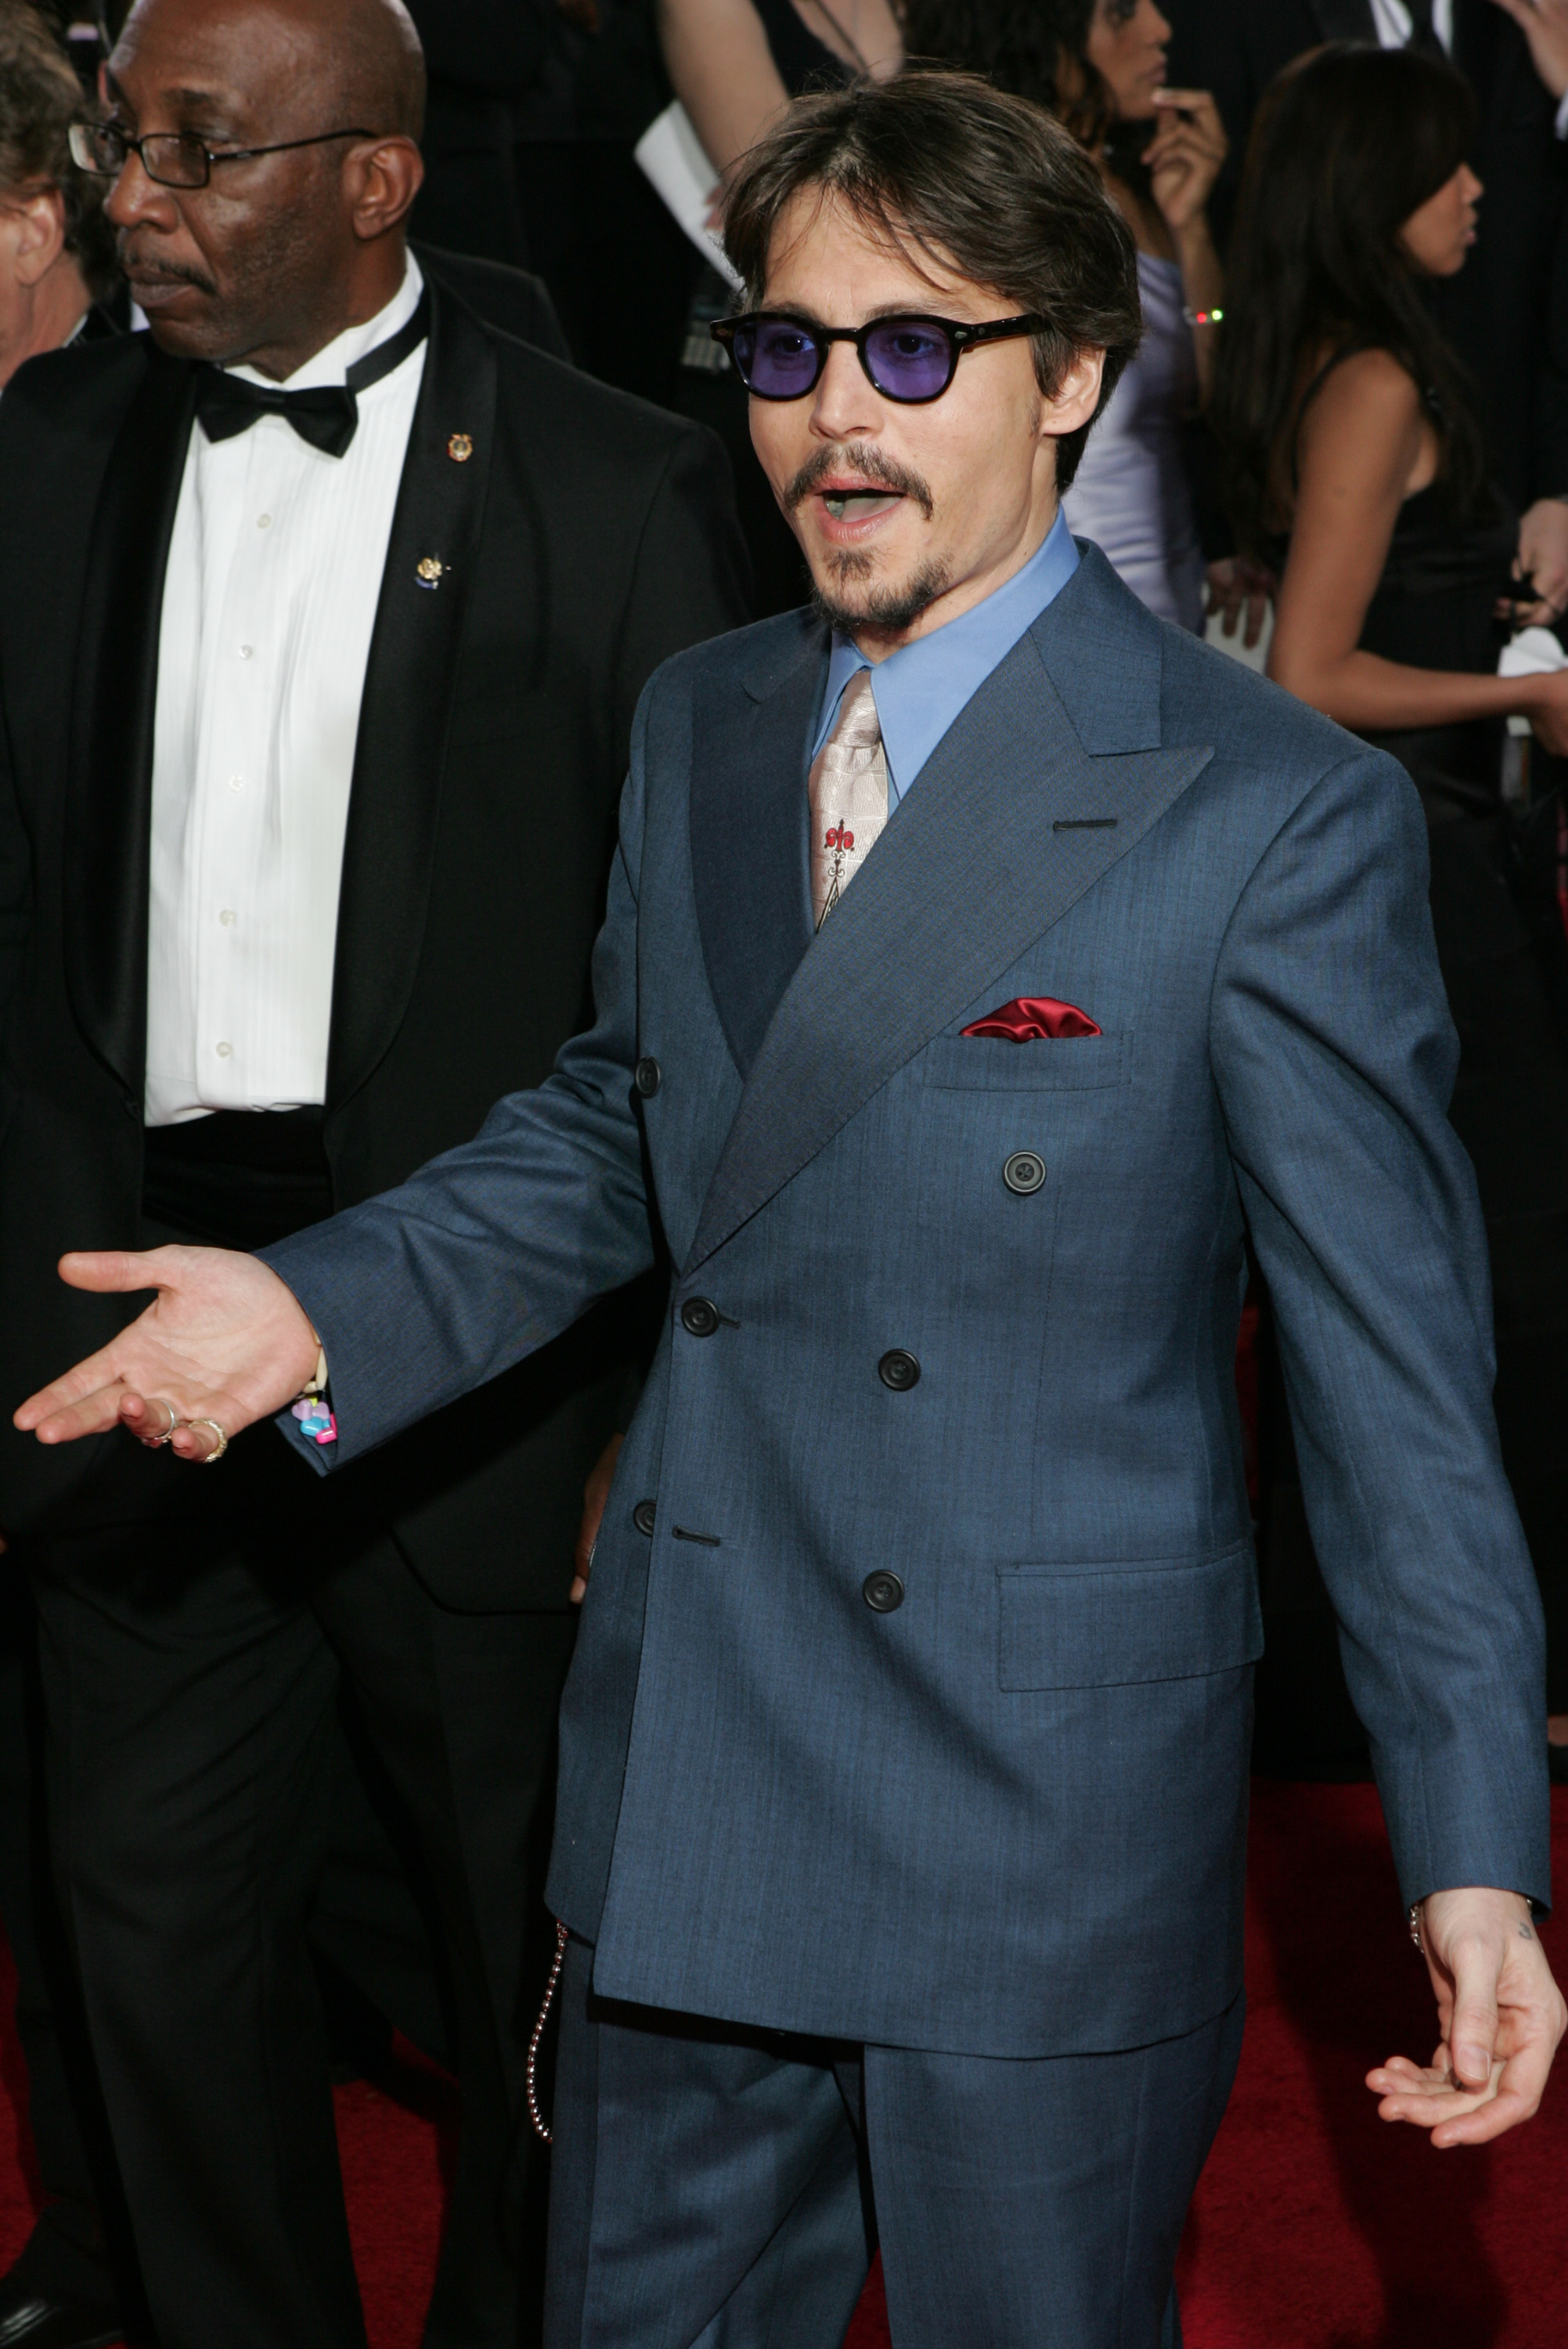 Johnny Depp bei den 62nd Annual Golden Globe Awards in Beverly Hills, Kalifornien am 16. Januar 2005 | Quelle: Getty Images